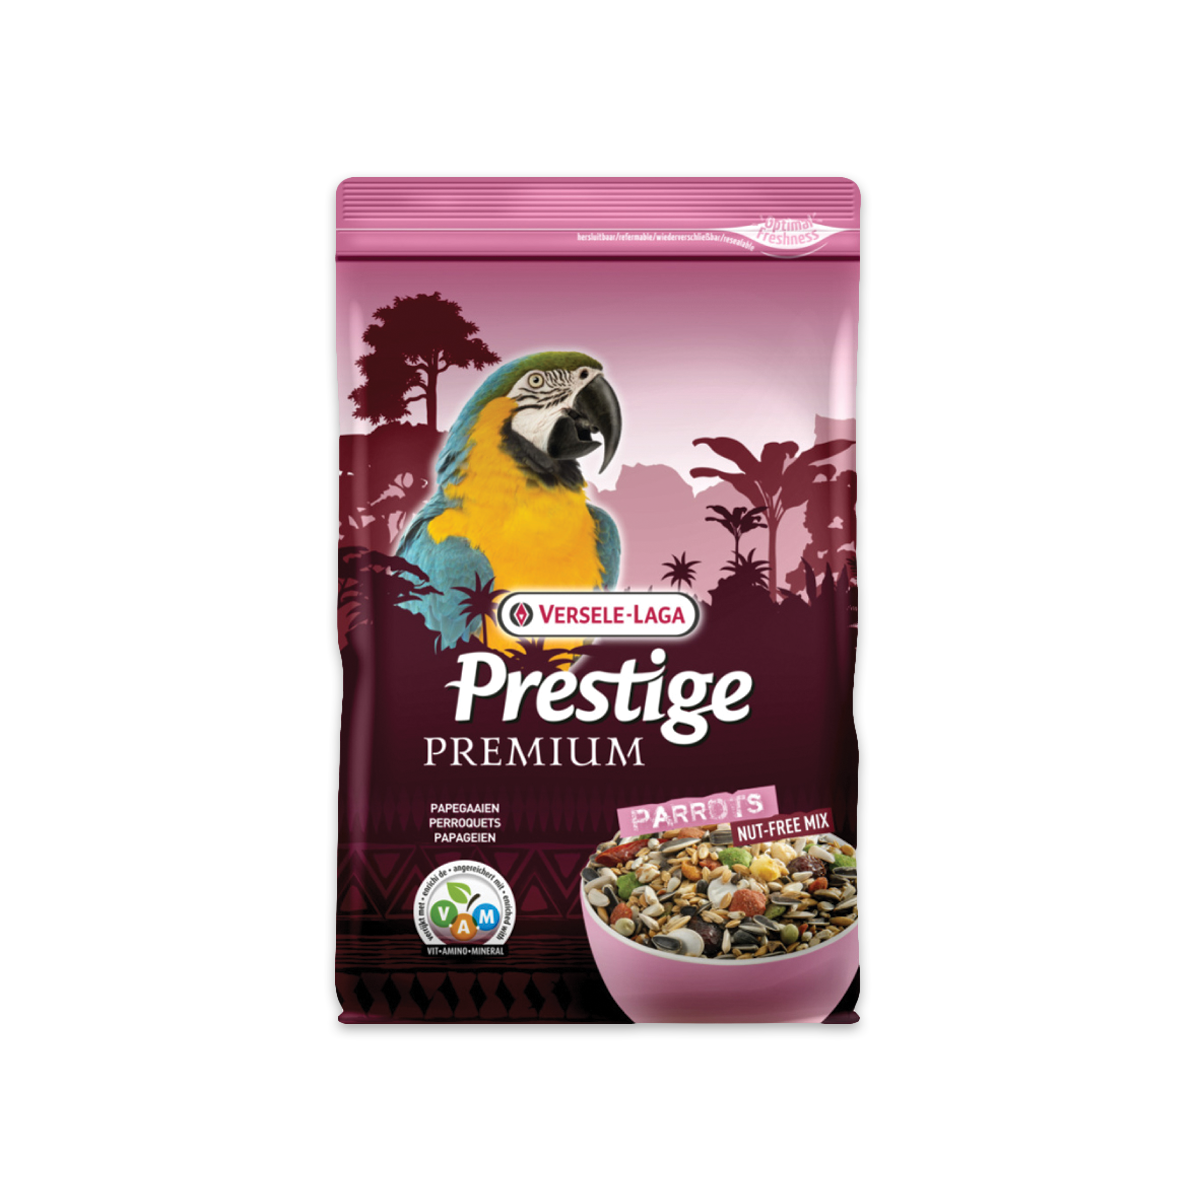 Versele-Laga Prestige Premium (Nut-Free) Parrots เวอร์เซเล ลากา อาหารนกแก้วใหญ่ (ไม่มีถั่ว) ขนาด 2 กิโลกรัม